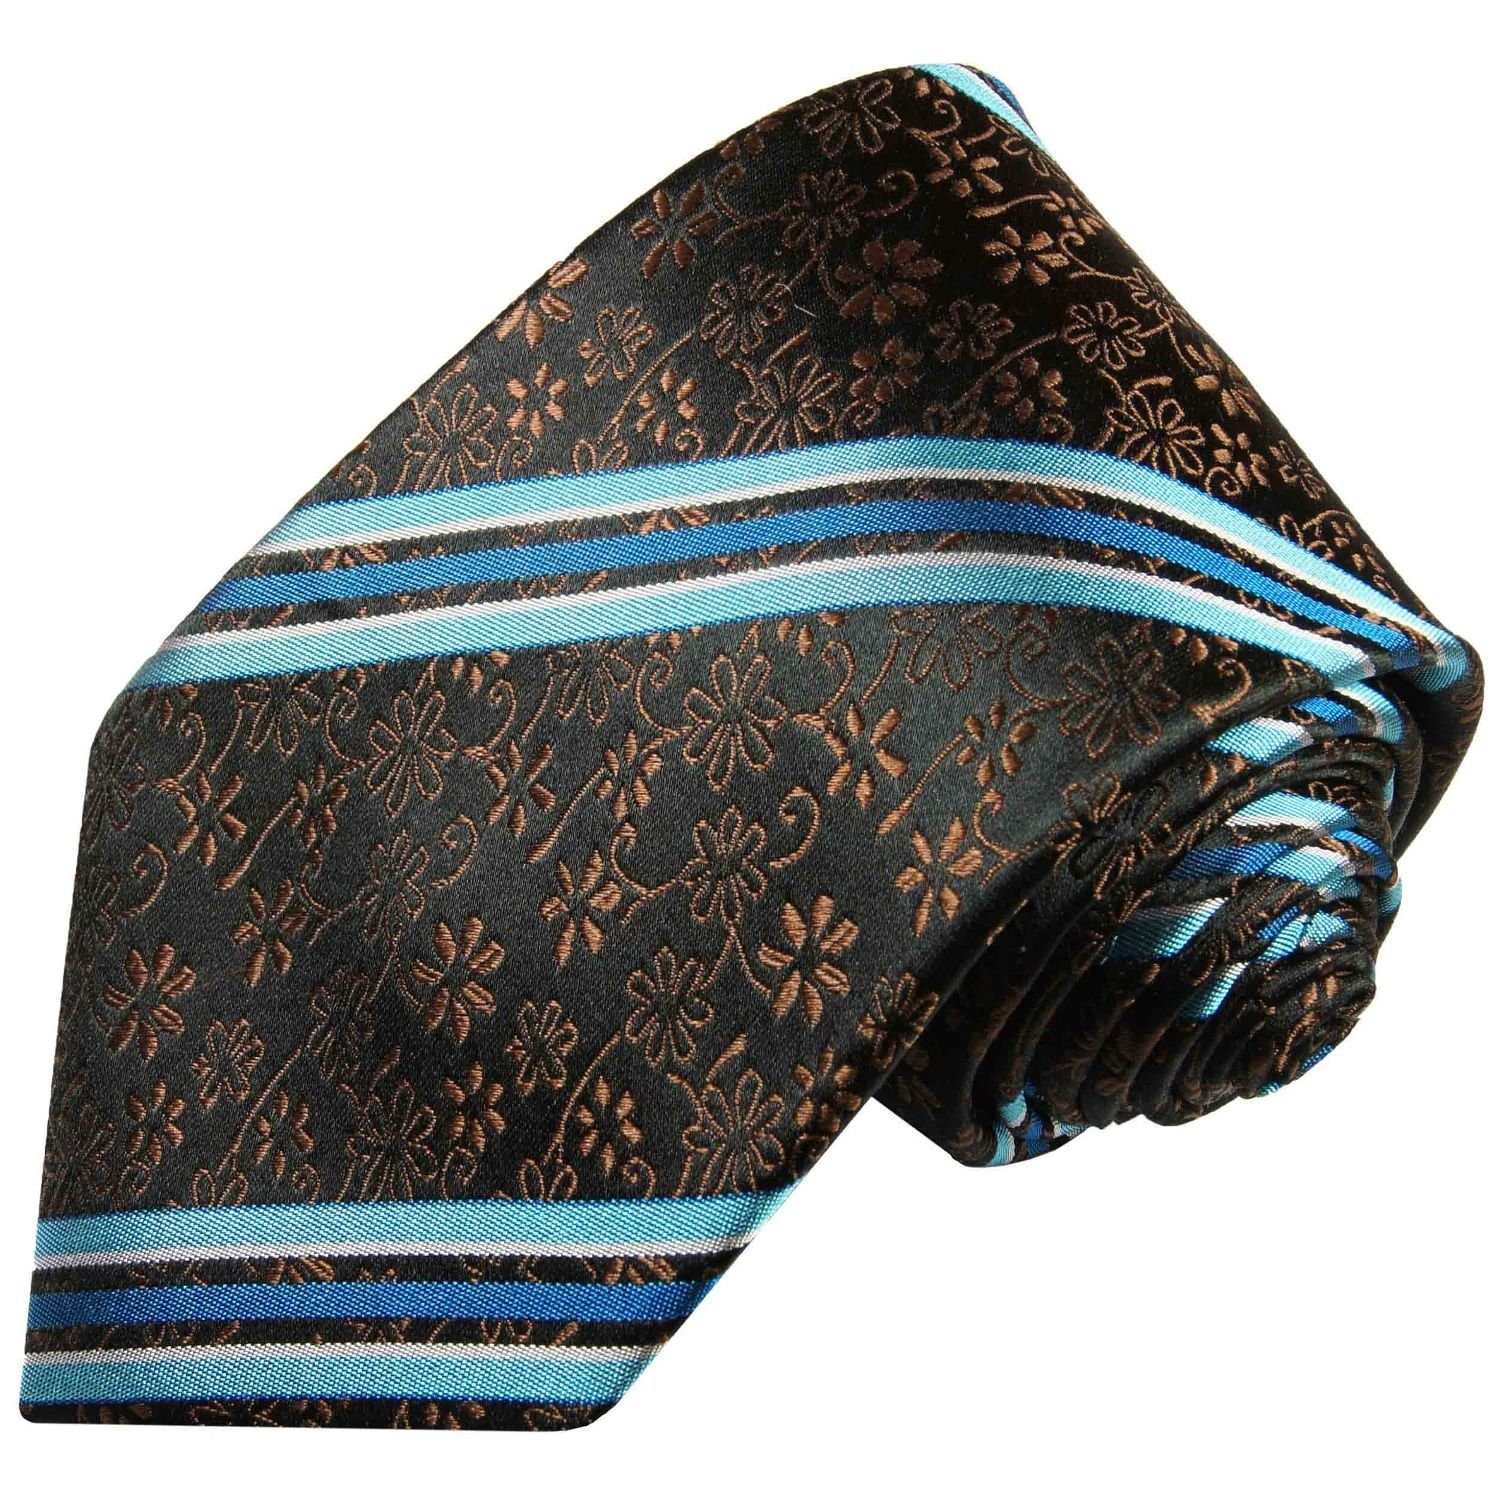 Malone Herren Seidenkrawatte (6cm), 100% Moderne gestreift Schmal Seide braun Krawatte türkis 394 Paul floral